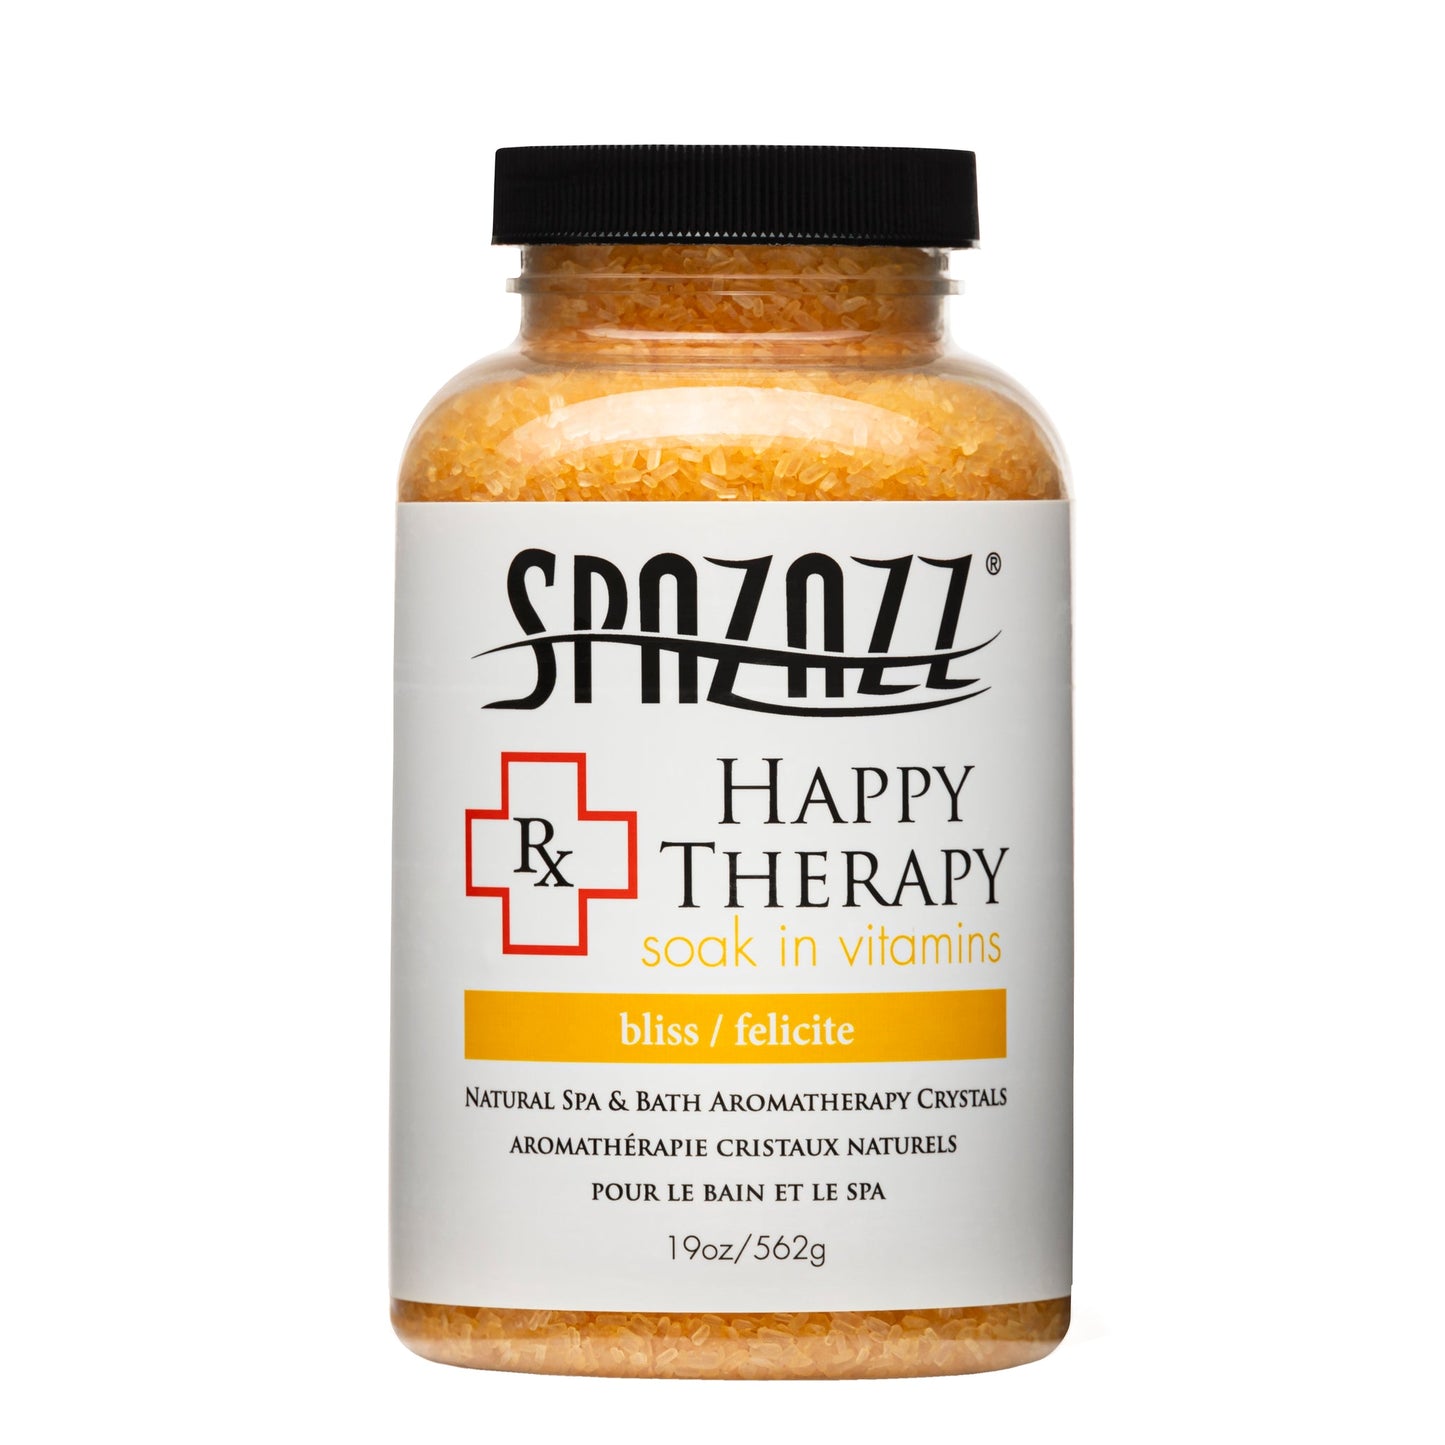 Spazazz Soak in Vitamins – Happy Therapy